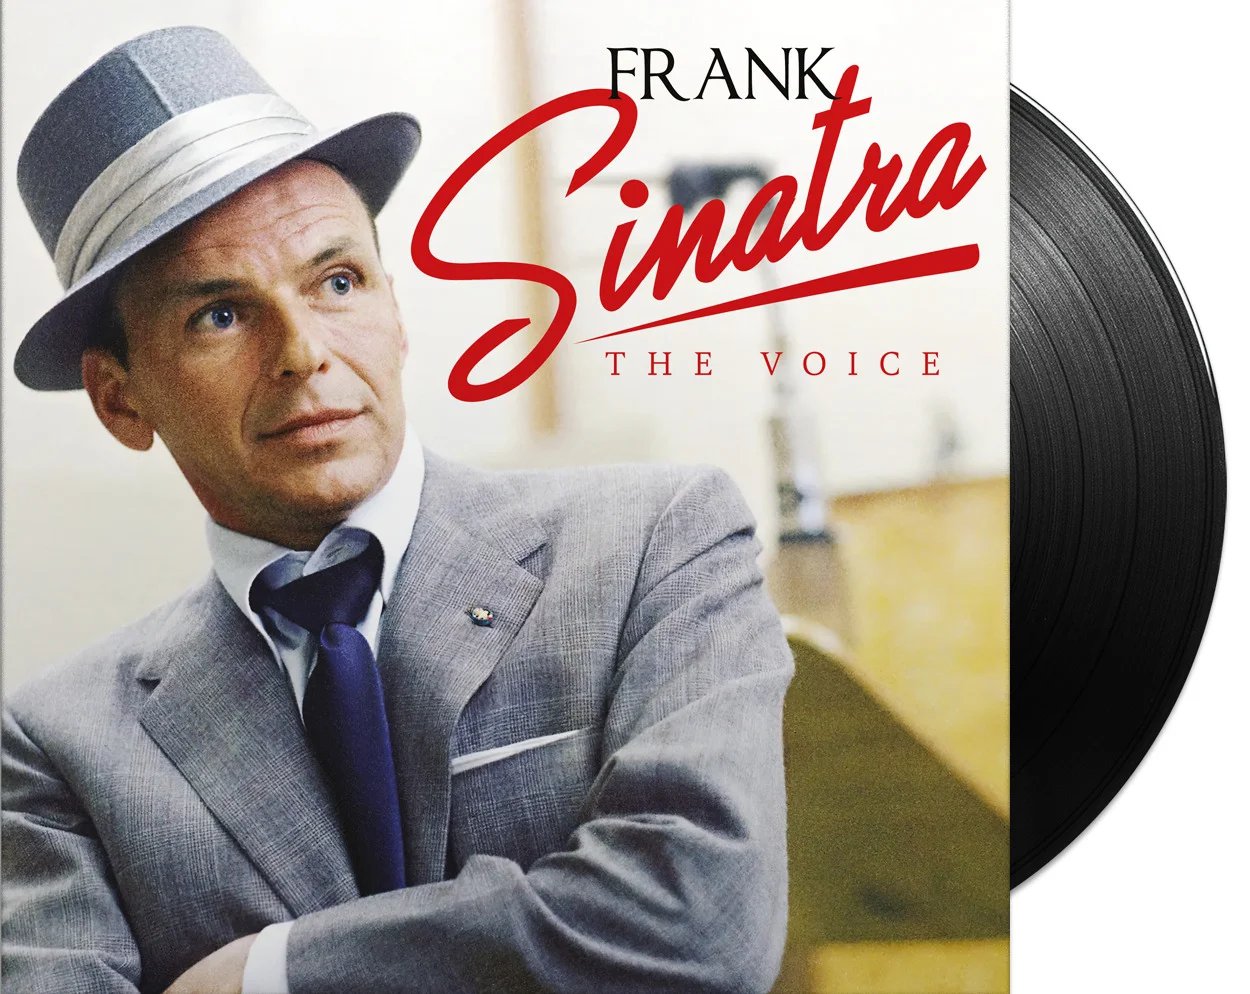 Frank Sinatra – The Voice (LP) цена и фото